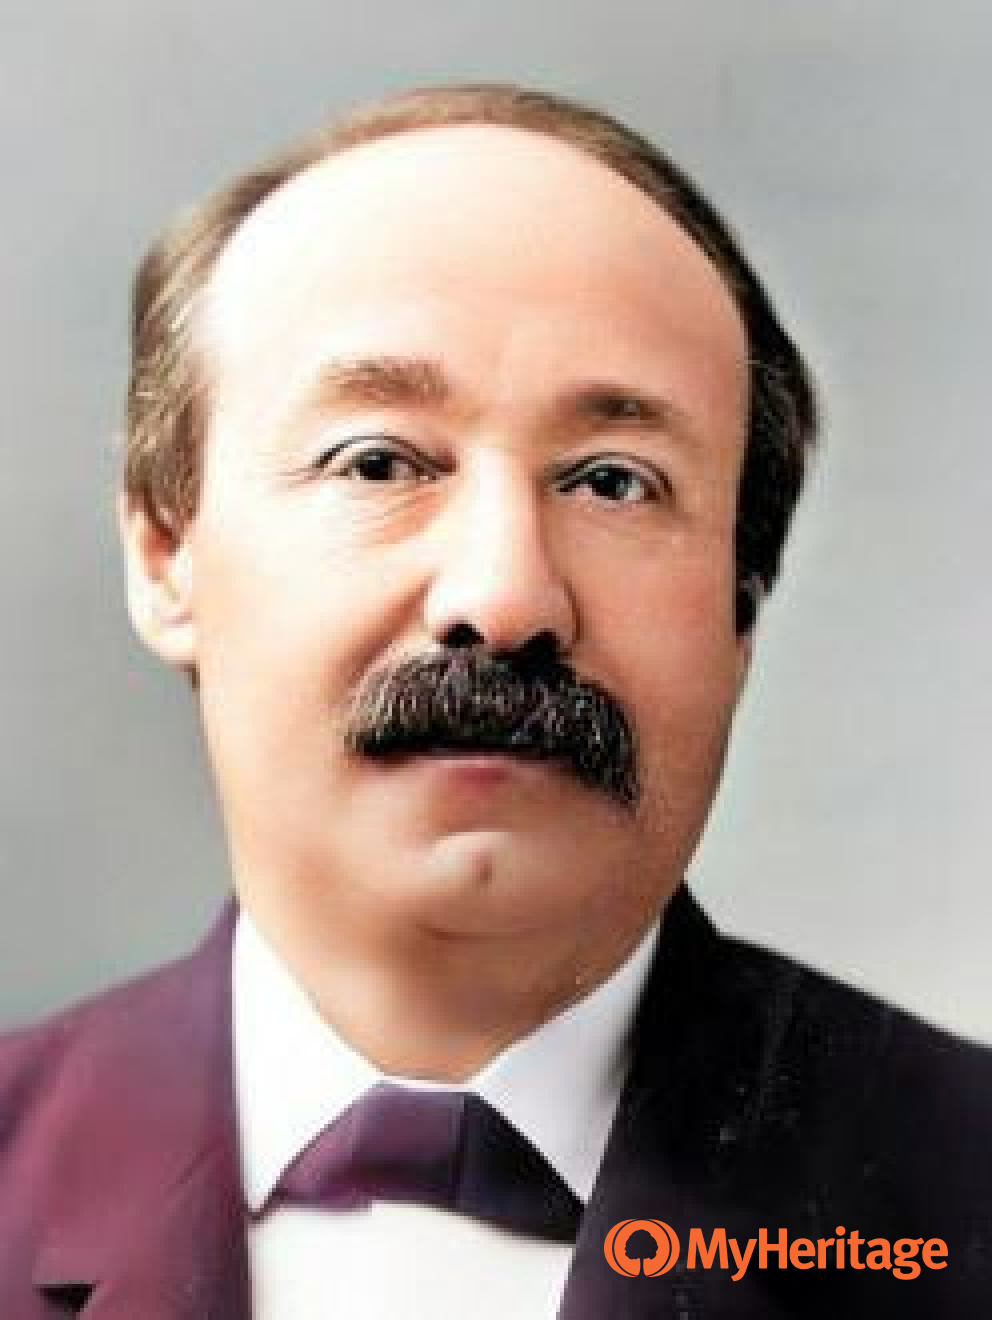 Charles Joseph Bonaparte. Photo enhanced and colorized by MyHeritage.